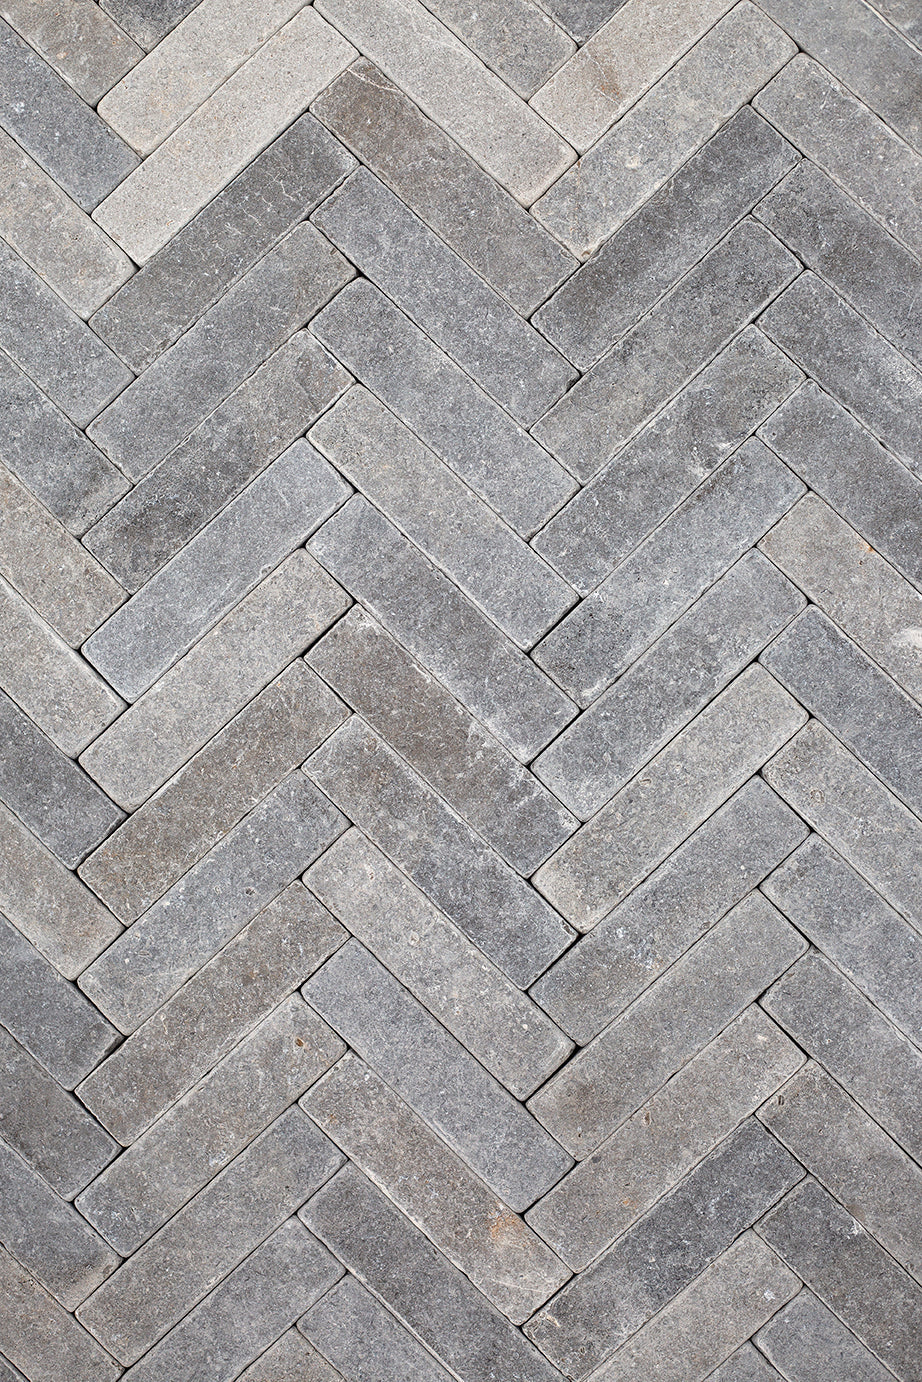 Farrow Grey Tumbled Herringbone Tiles